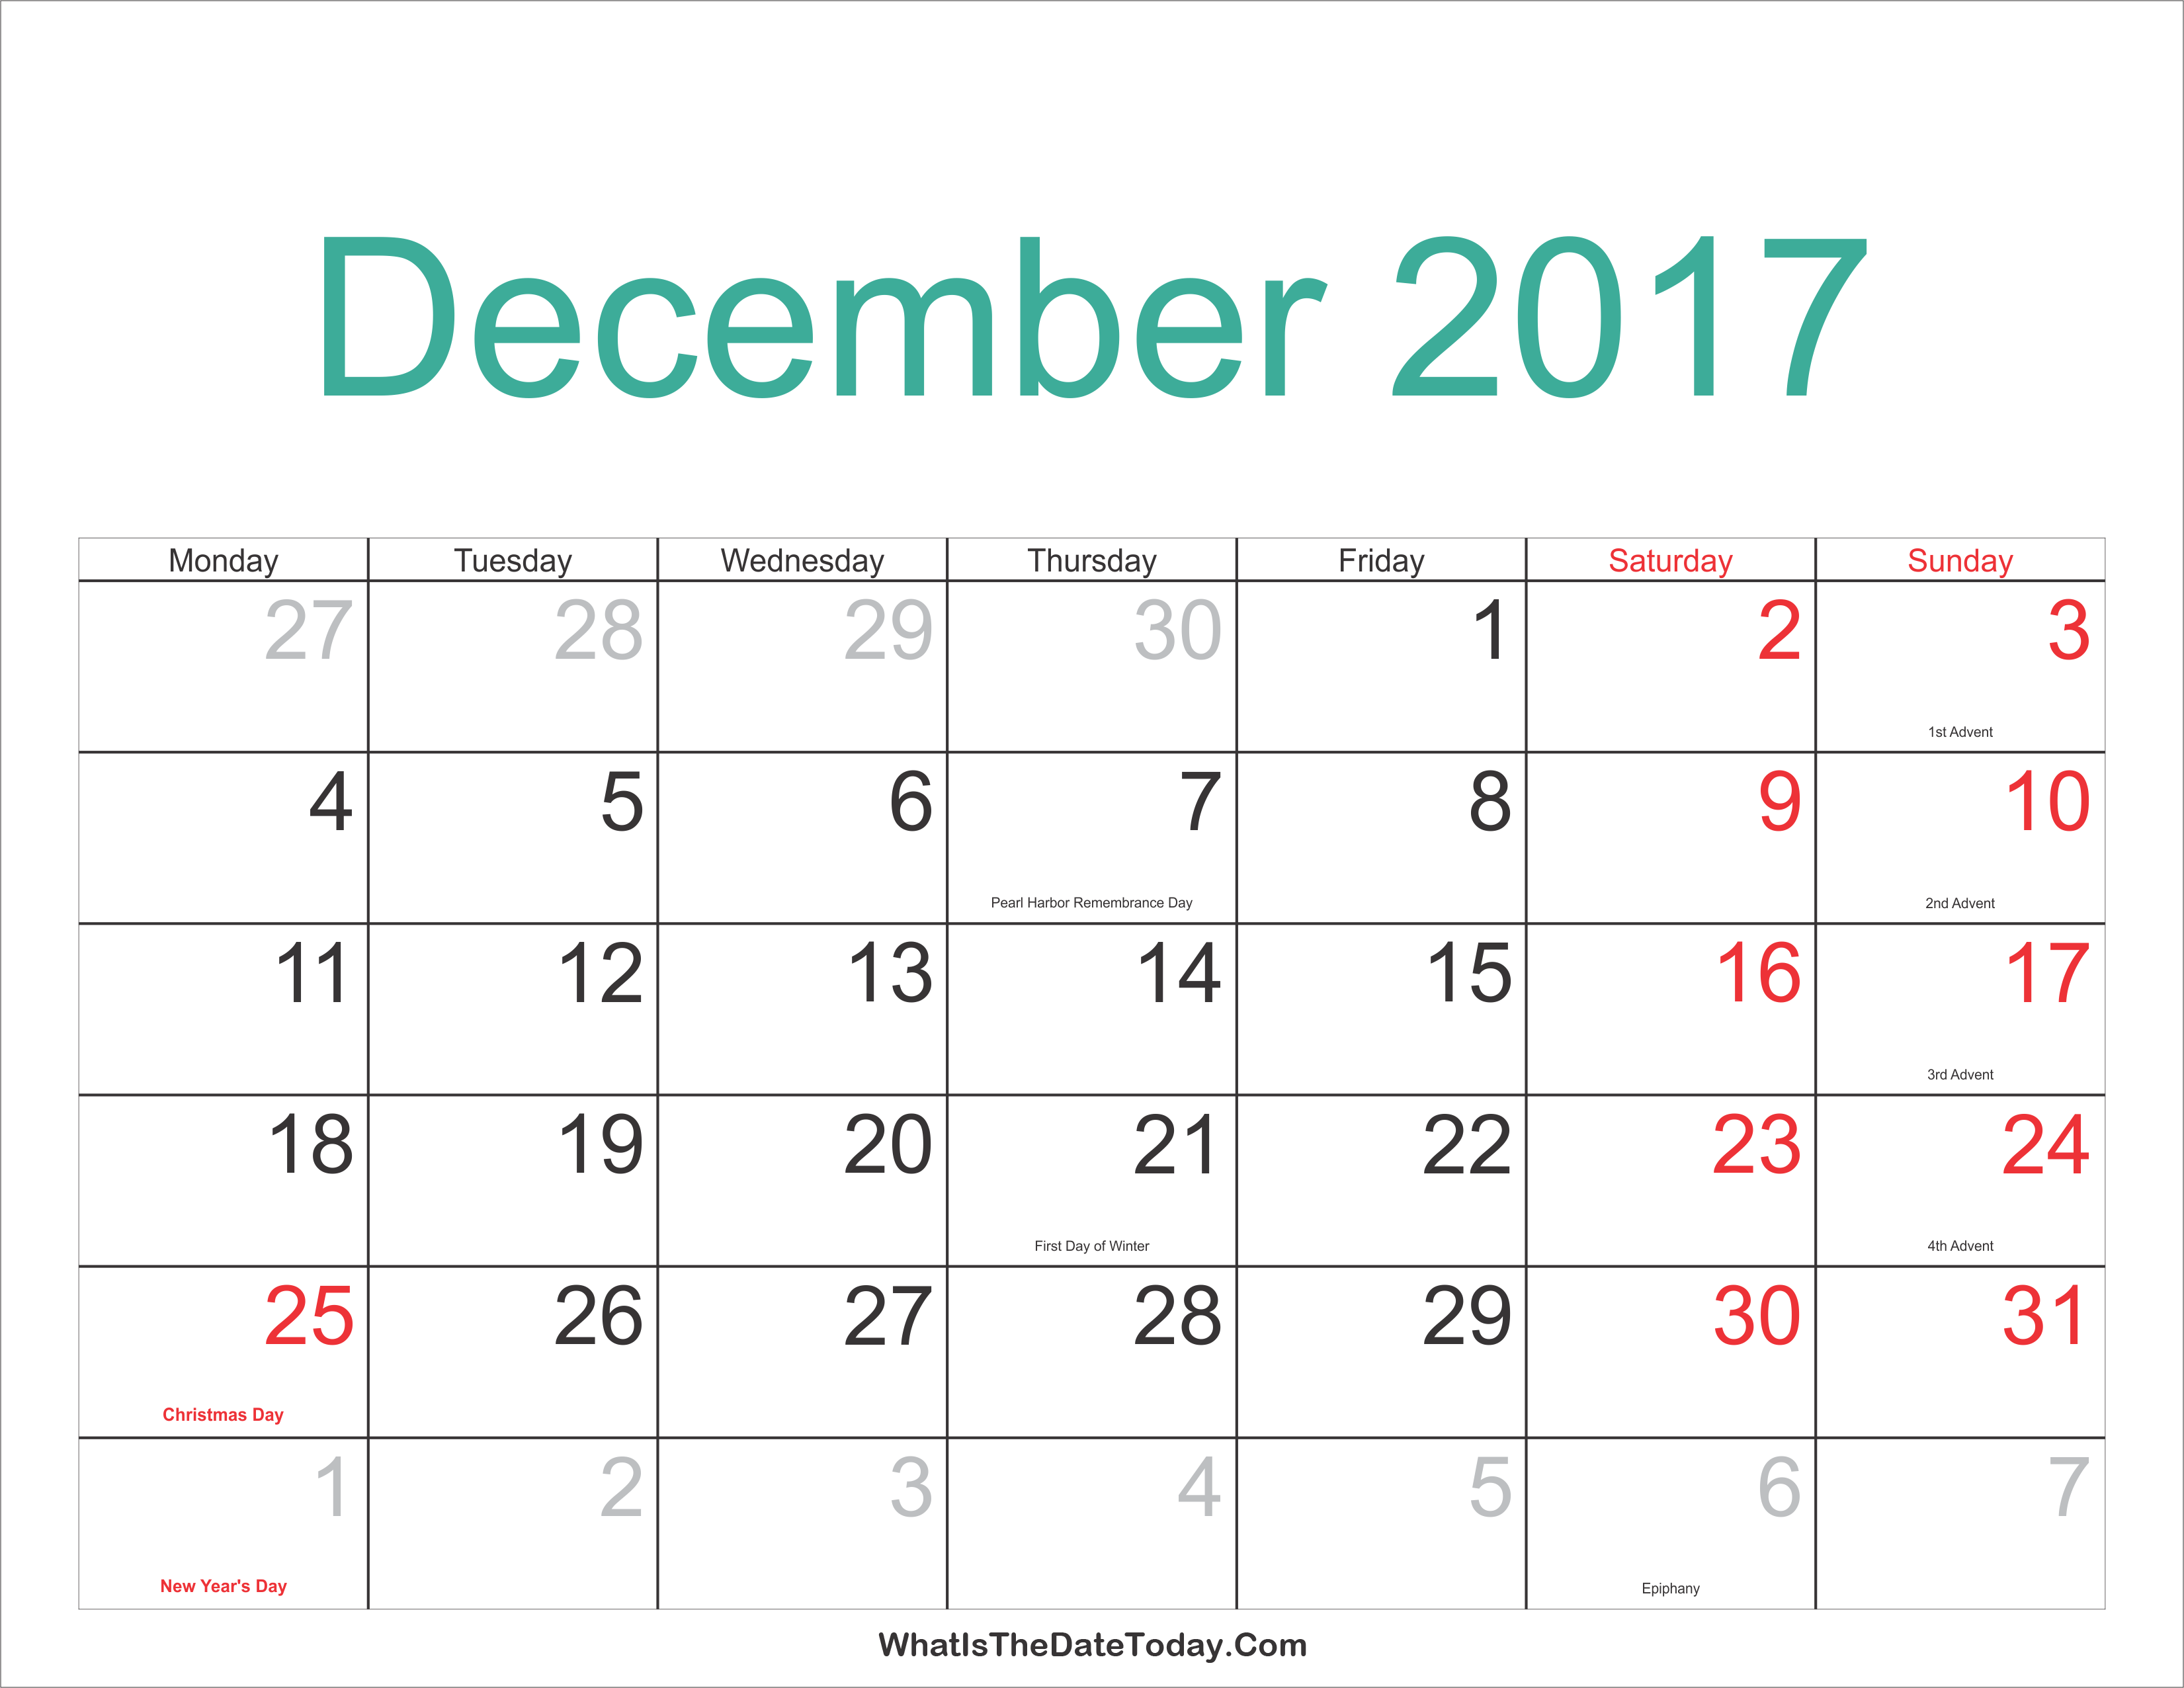 december-2017-calendar-printable-with-holidays-whatisthedatetoday-com